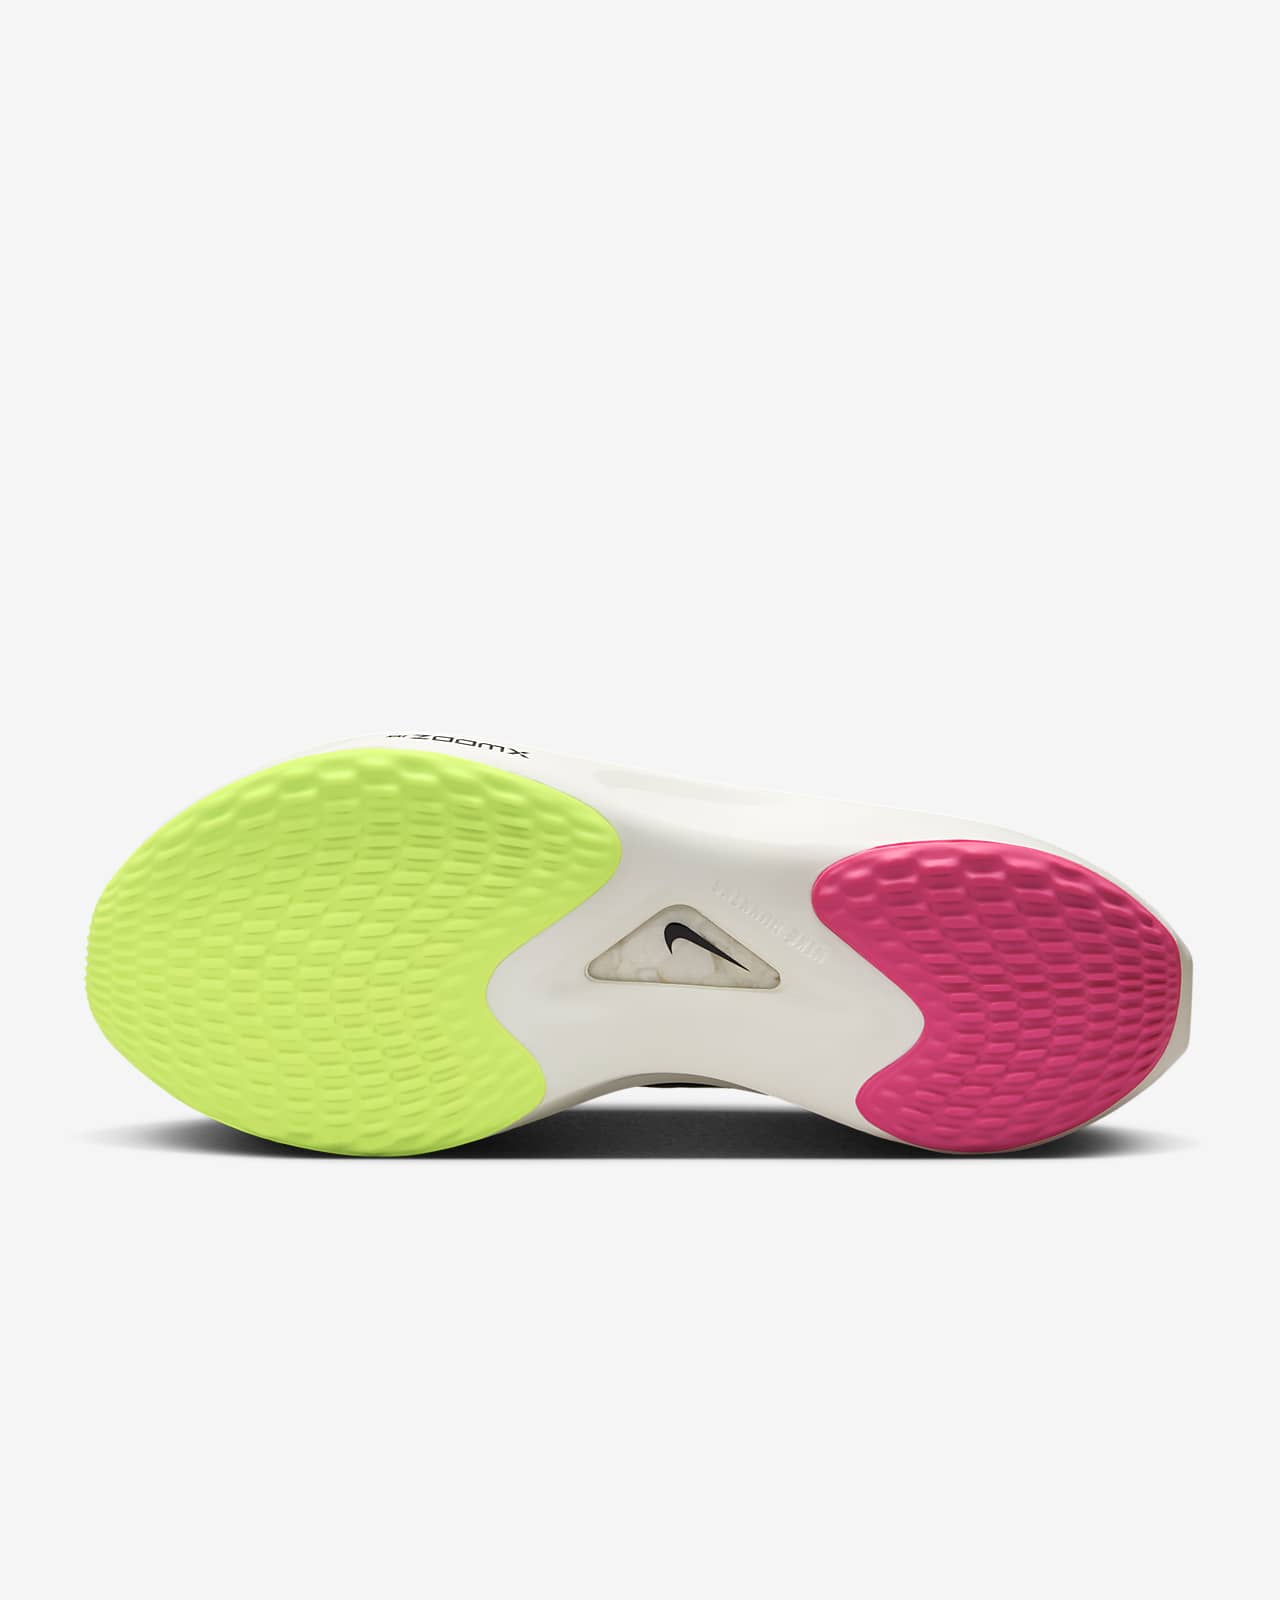 Nike Zoom Fly 5 Premium Men's Road Running Shoes